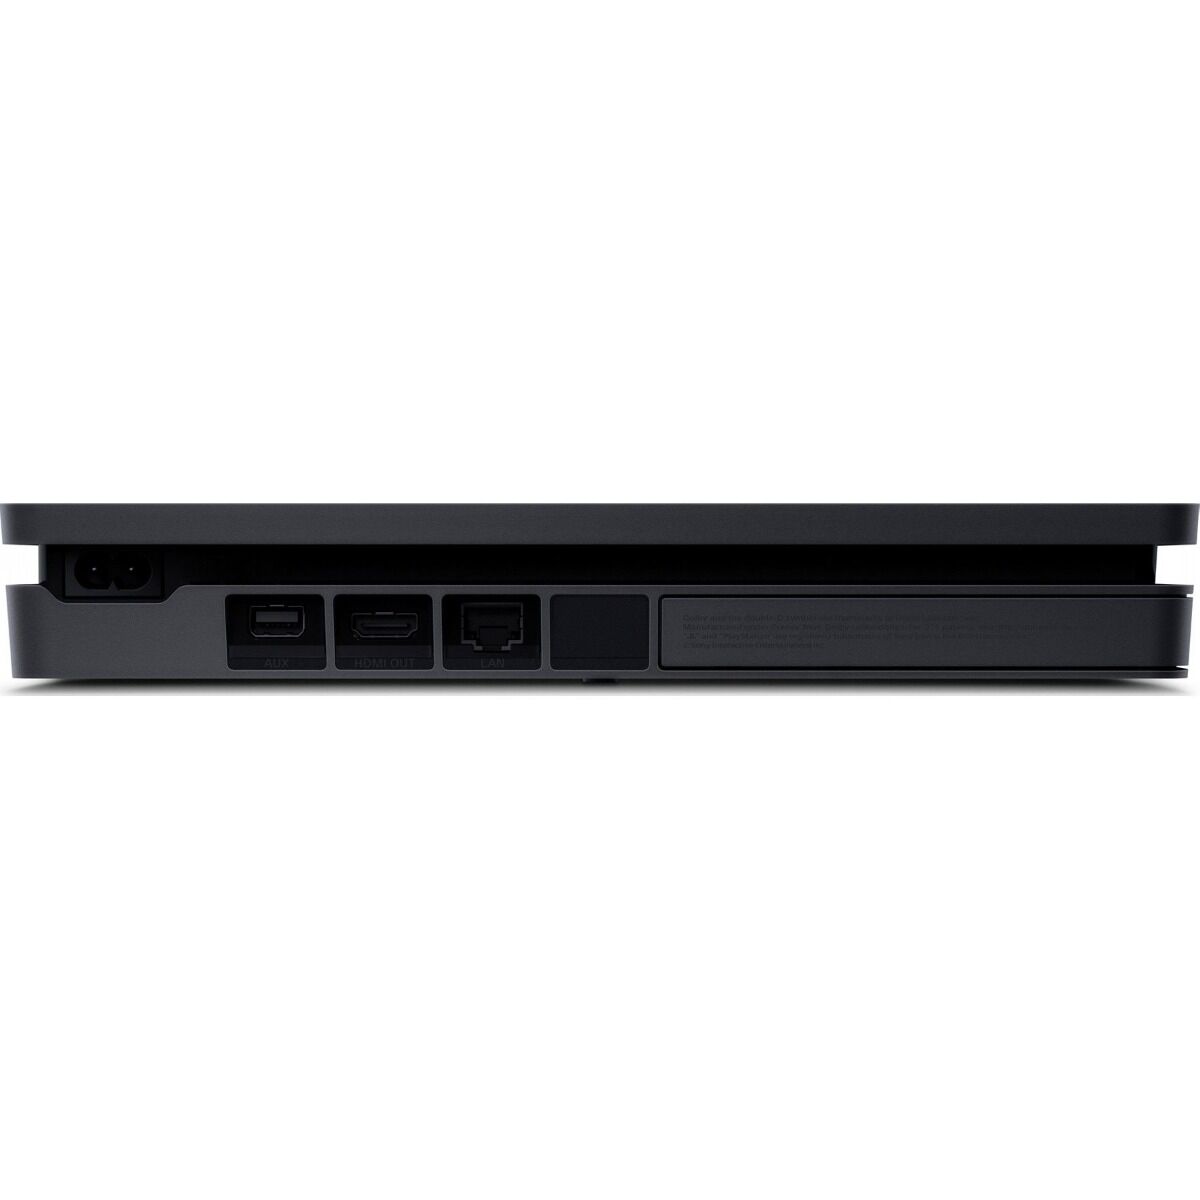 Consola PlayStation 4 Slim 1TB Black + FIFA 18